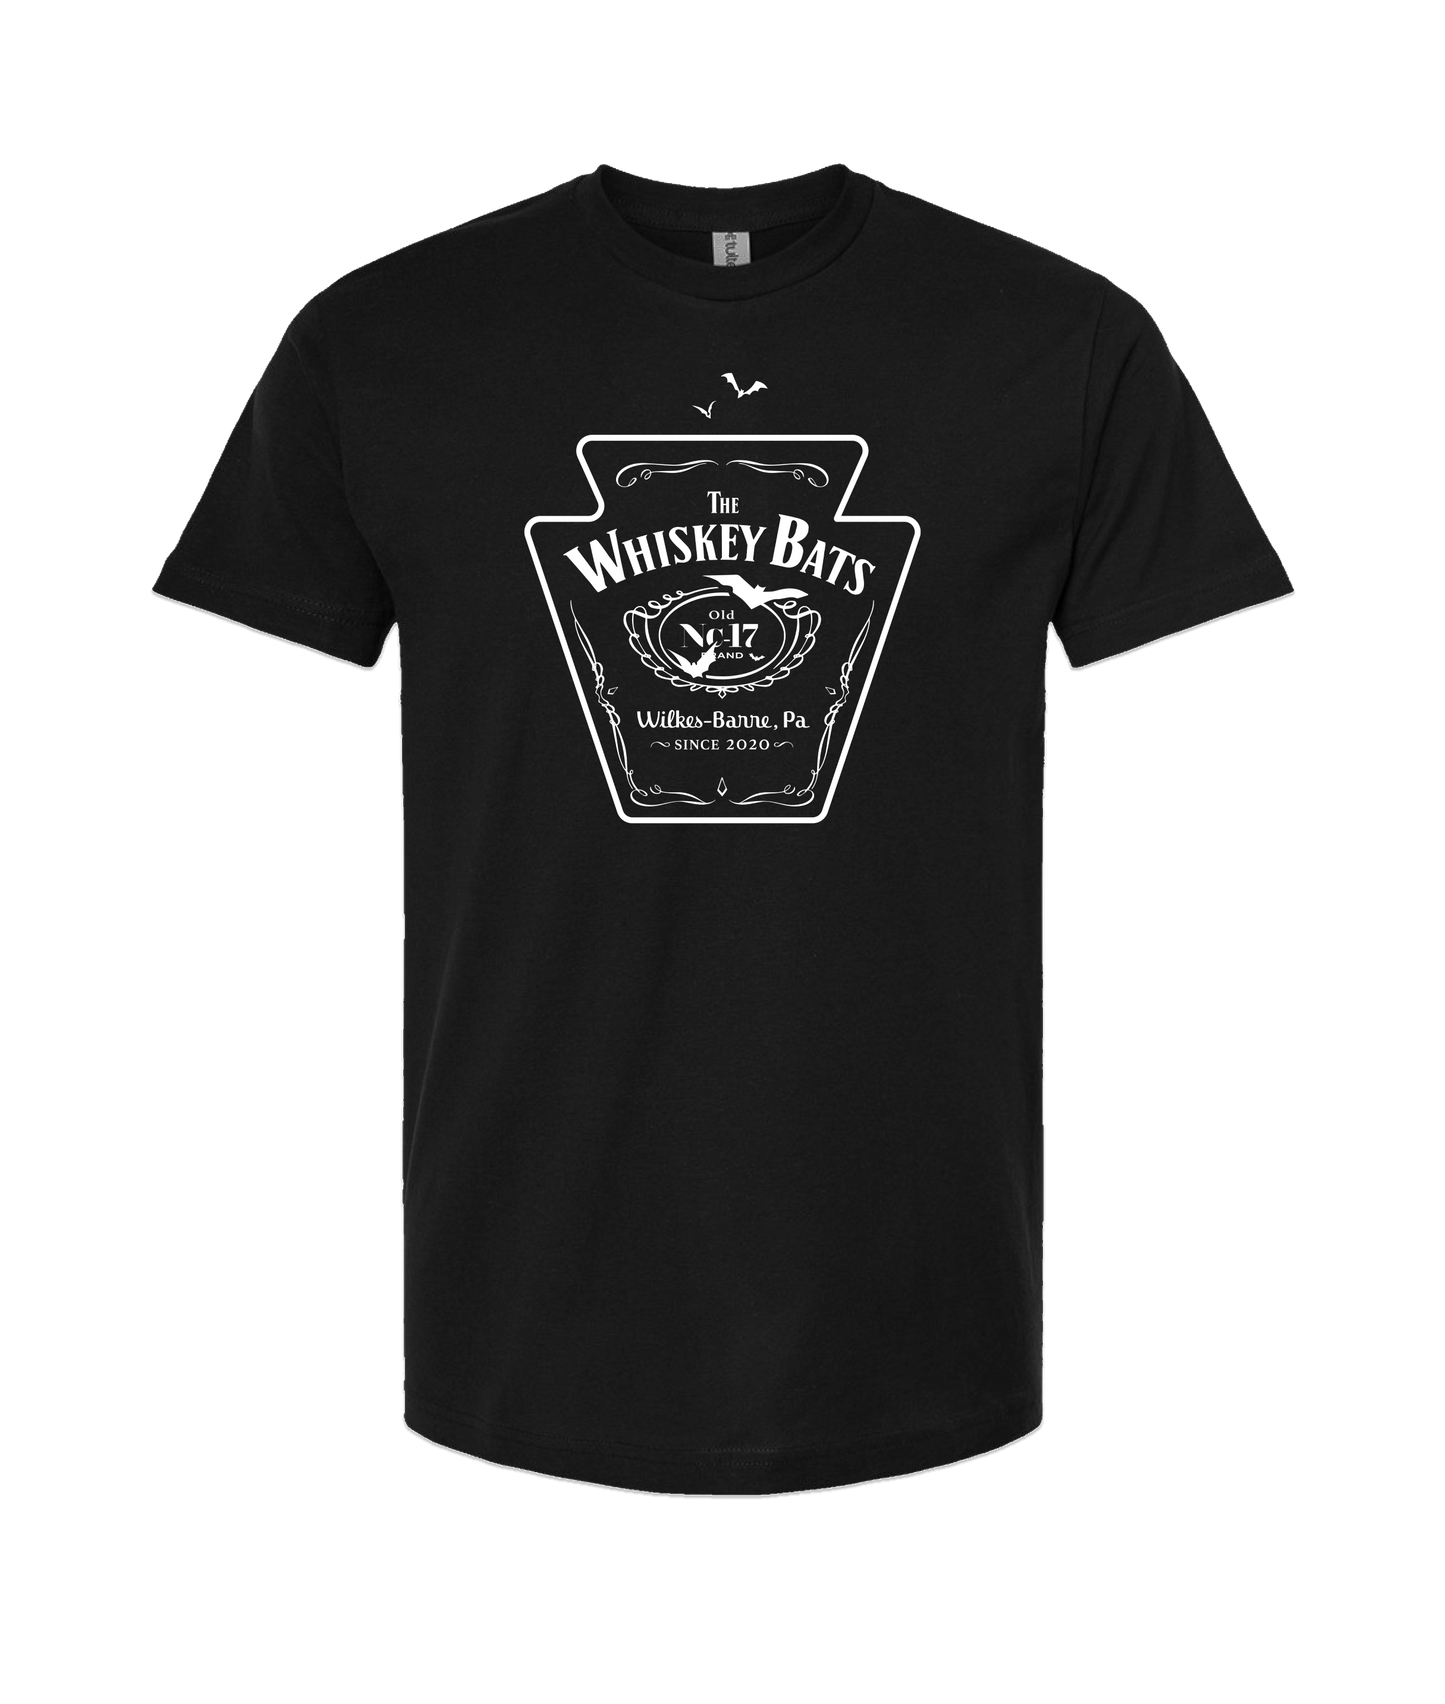 The Whiskey Bats - Wilkes-Barre, PA - Black T Shirt